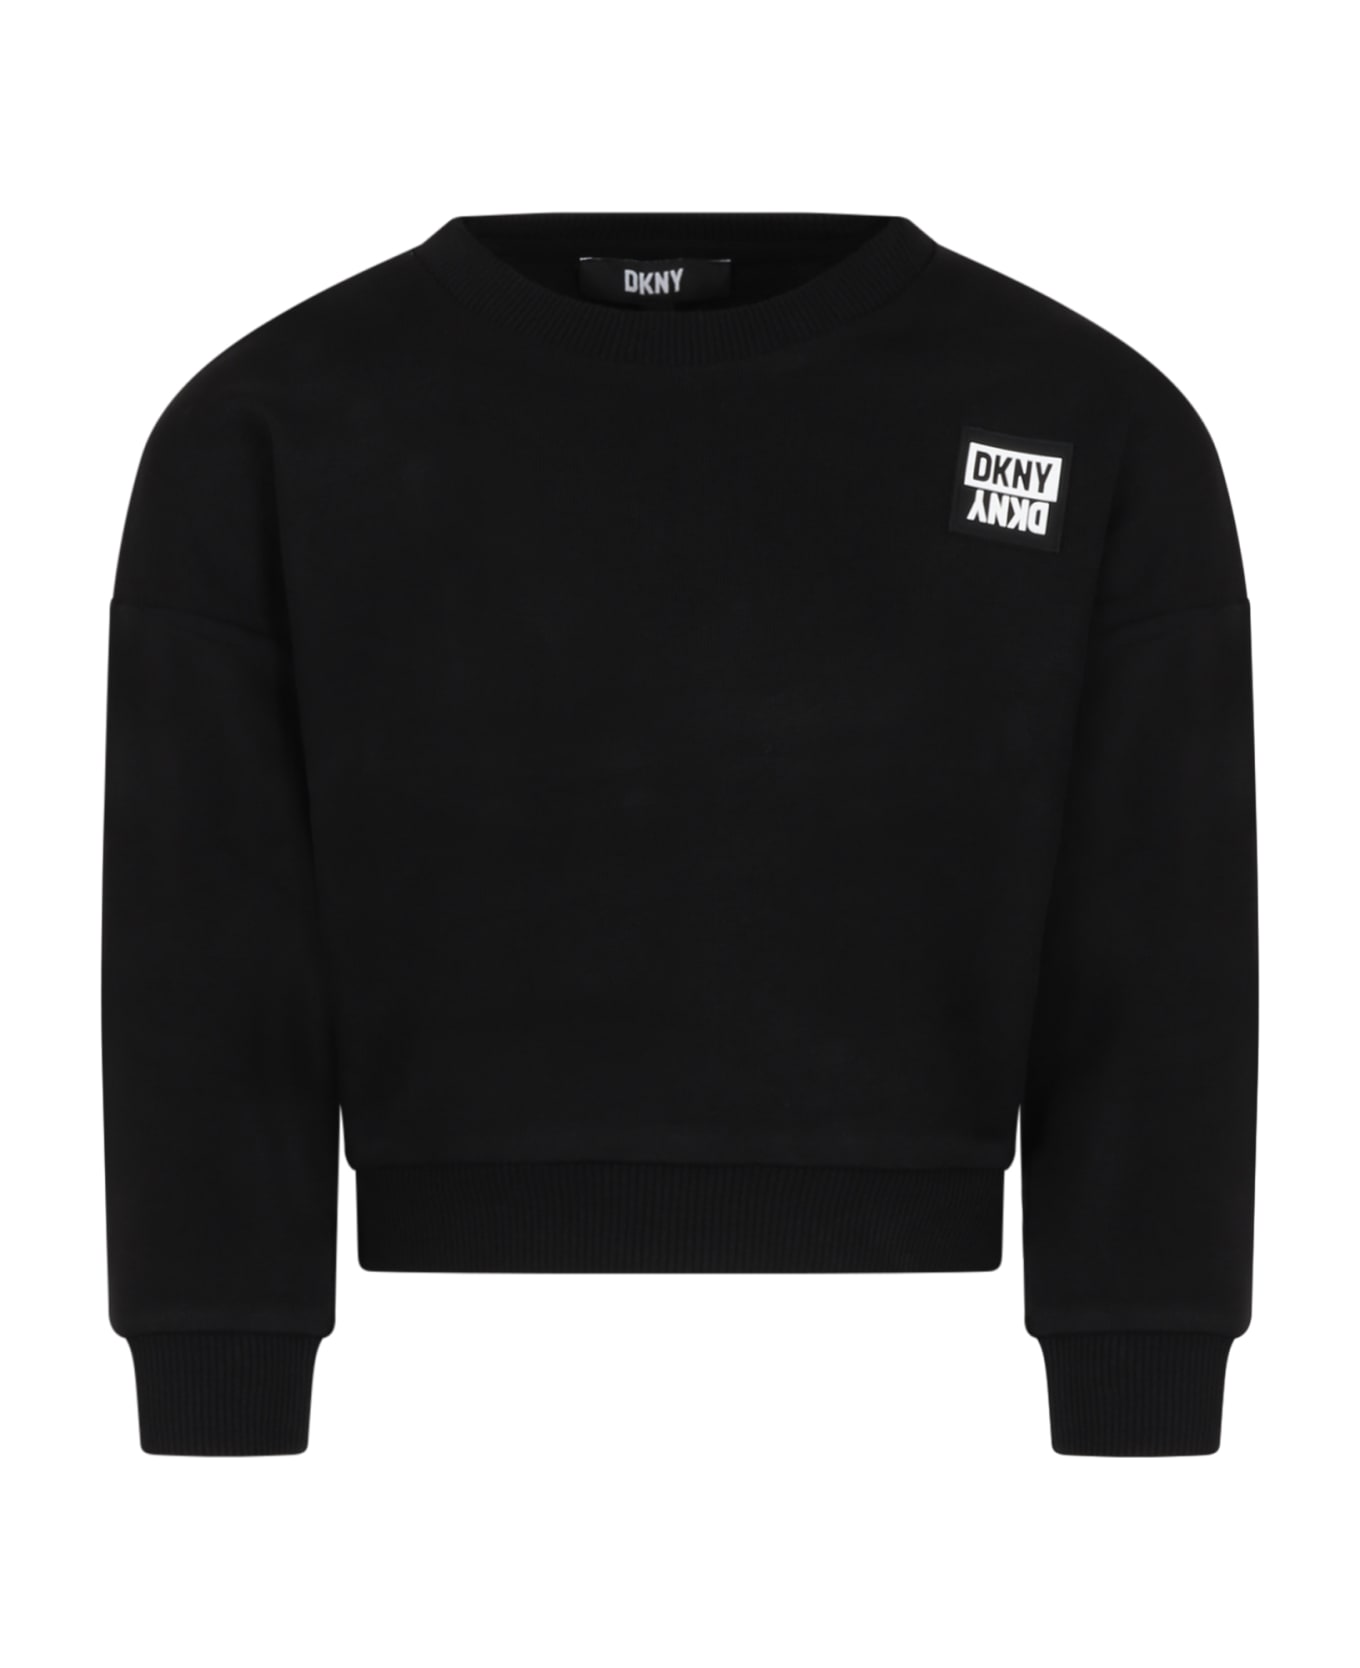 DKNY Black Sweatshirt For Girl With White Logo - Black